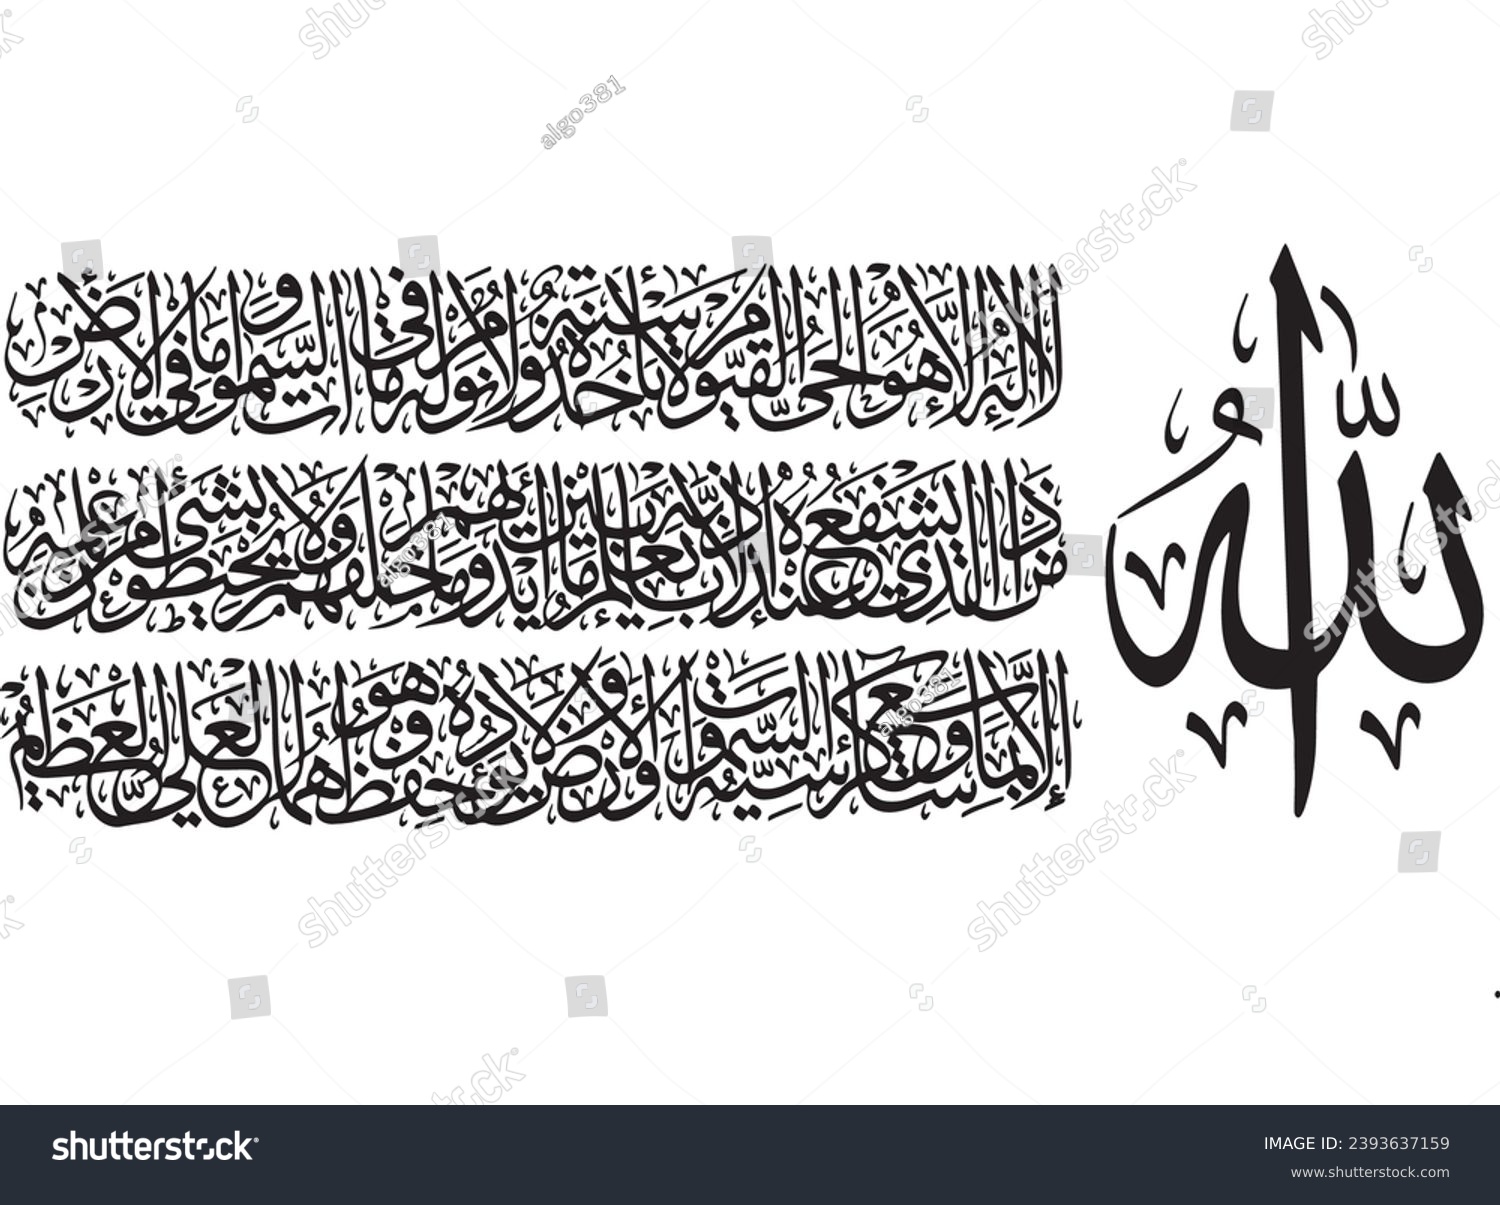 SVG of Abstract Islamic Calligraphy Quran Ayat-ul-Kursi Isolated Vector svg